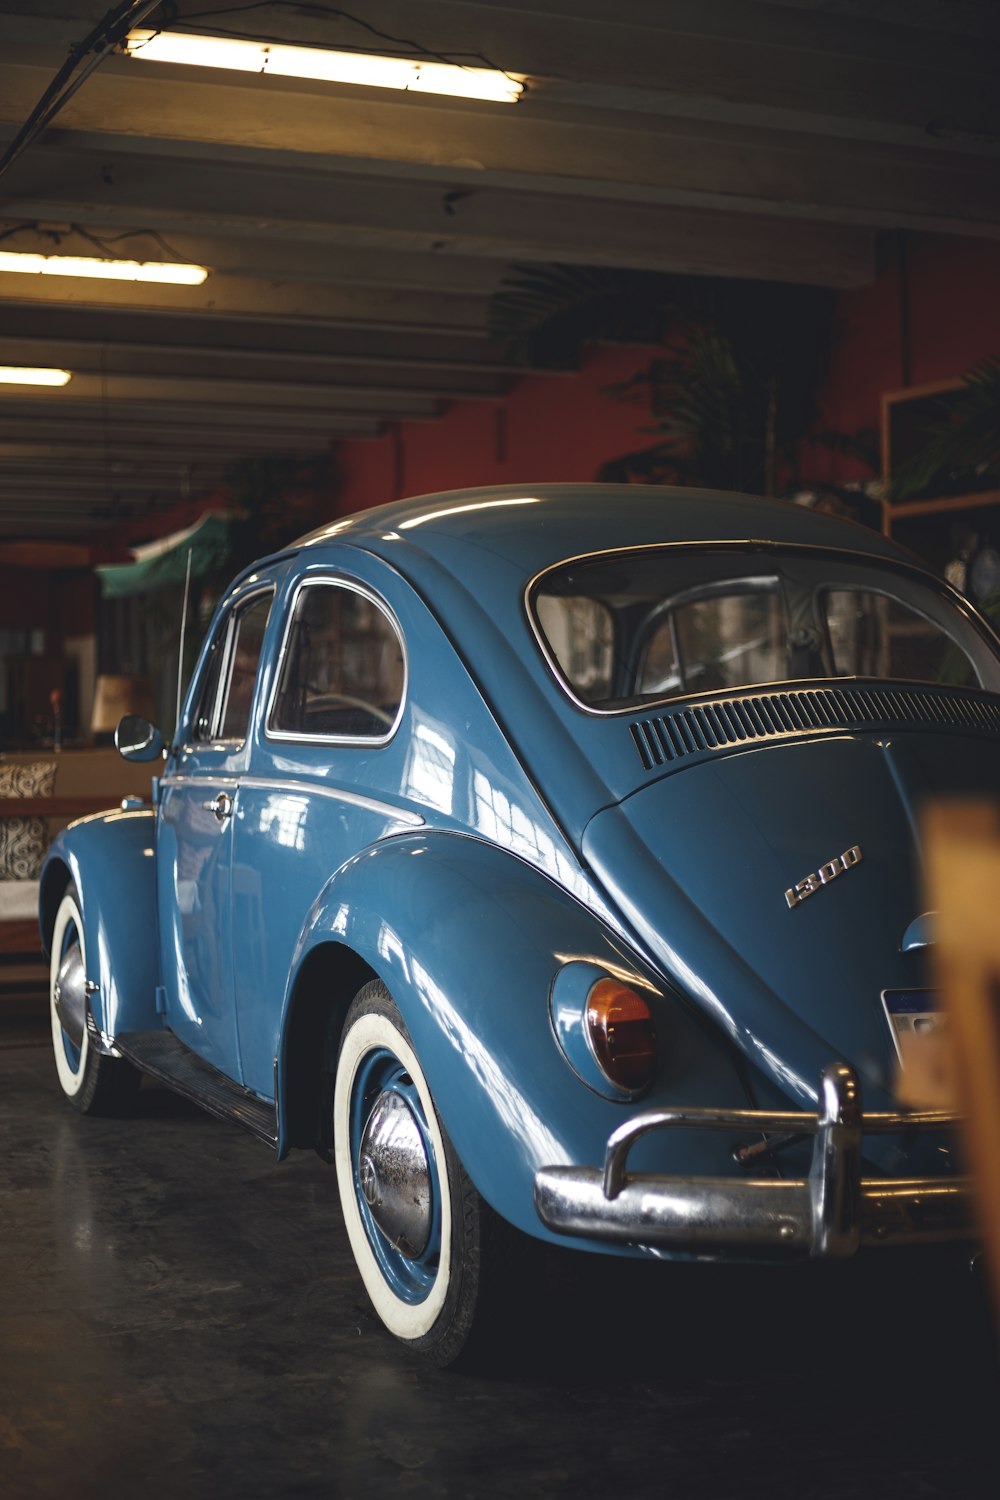 a blue car parked inside of a garage